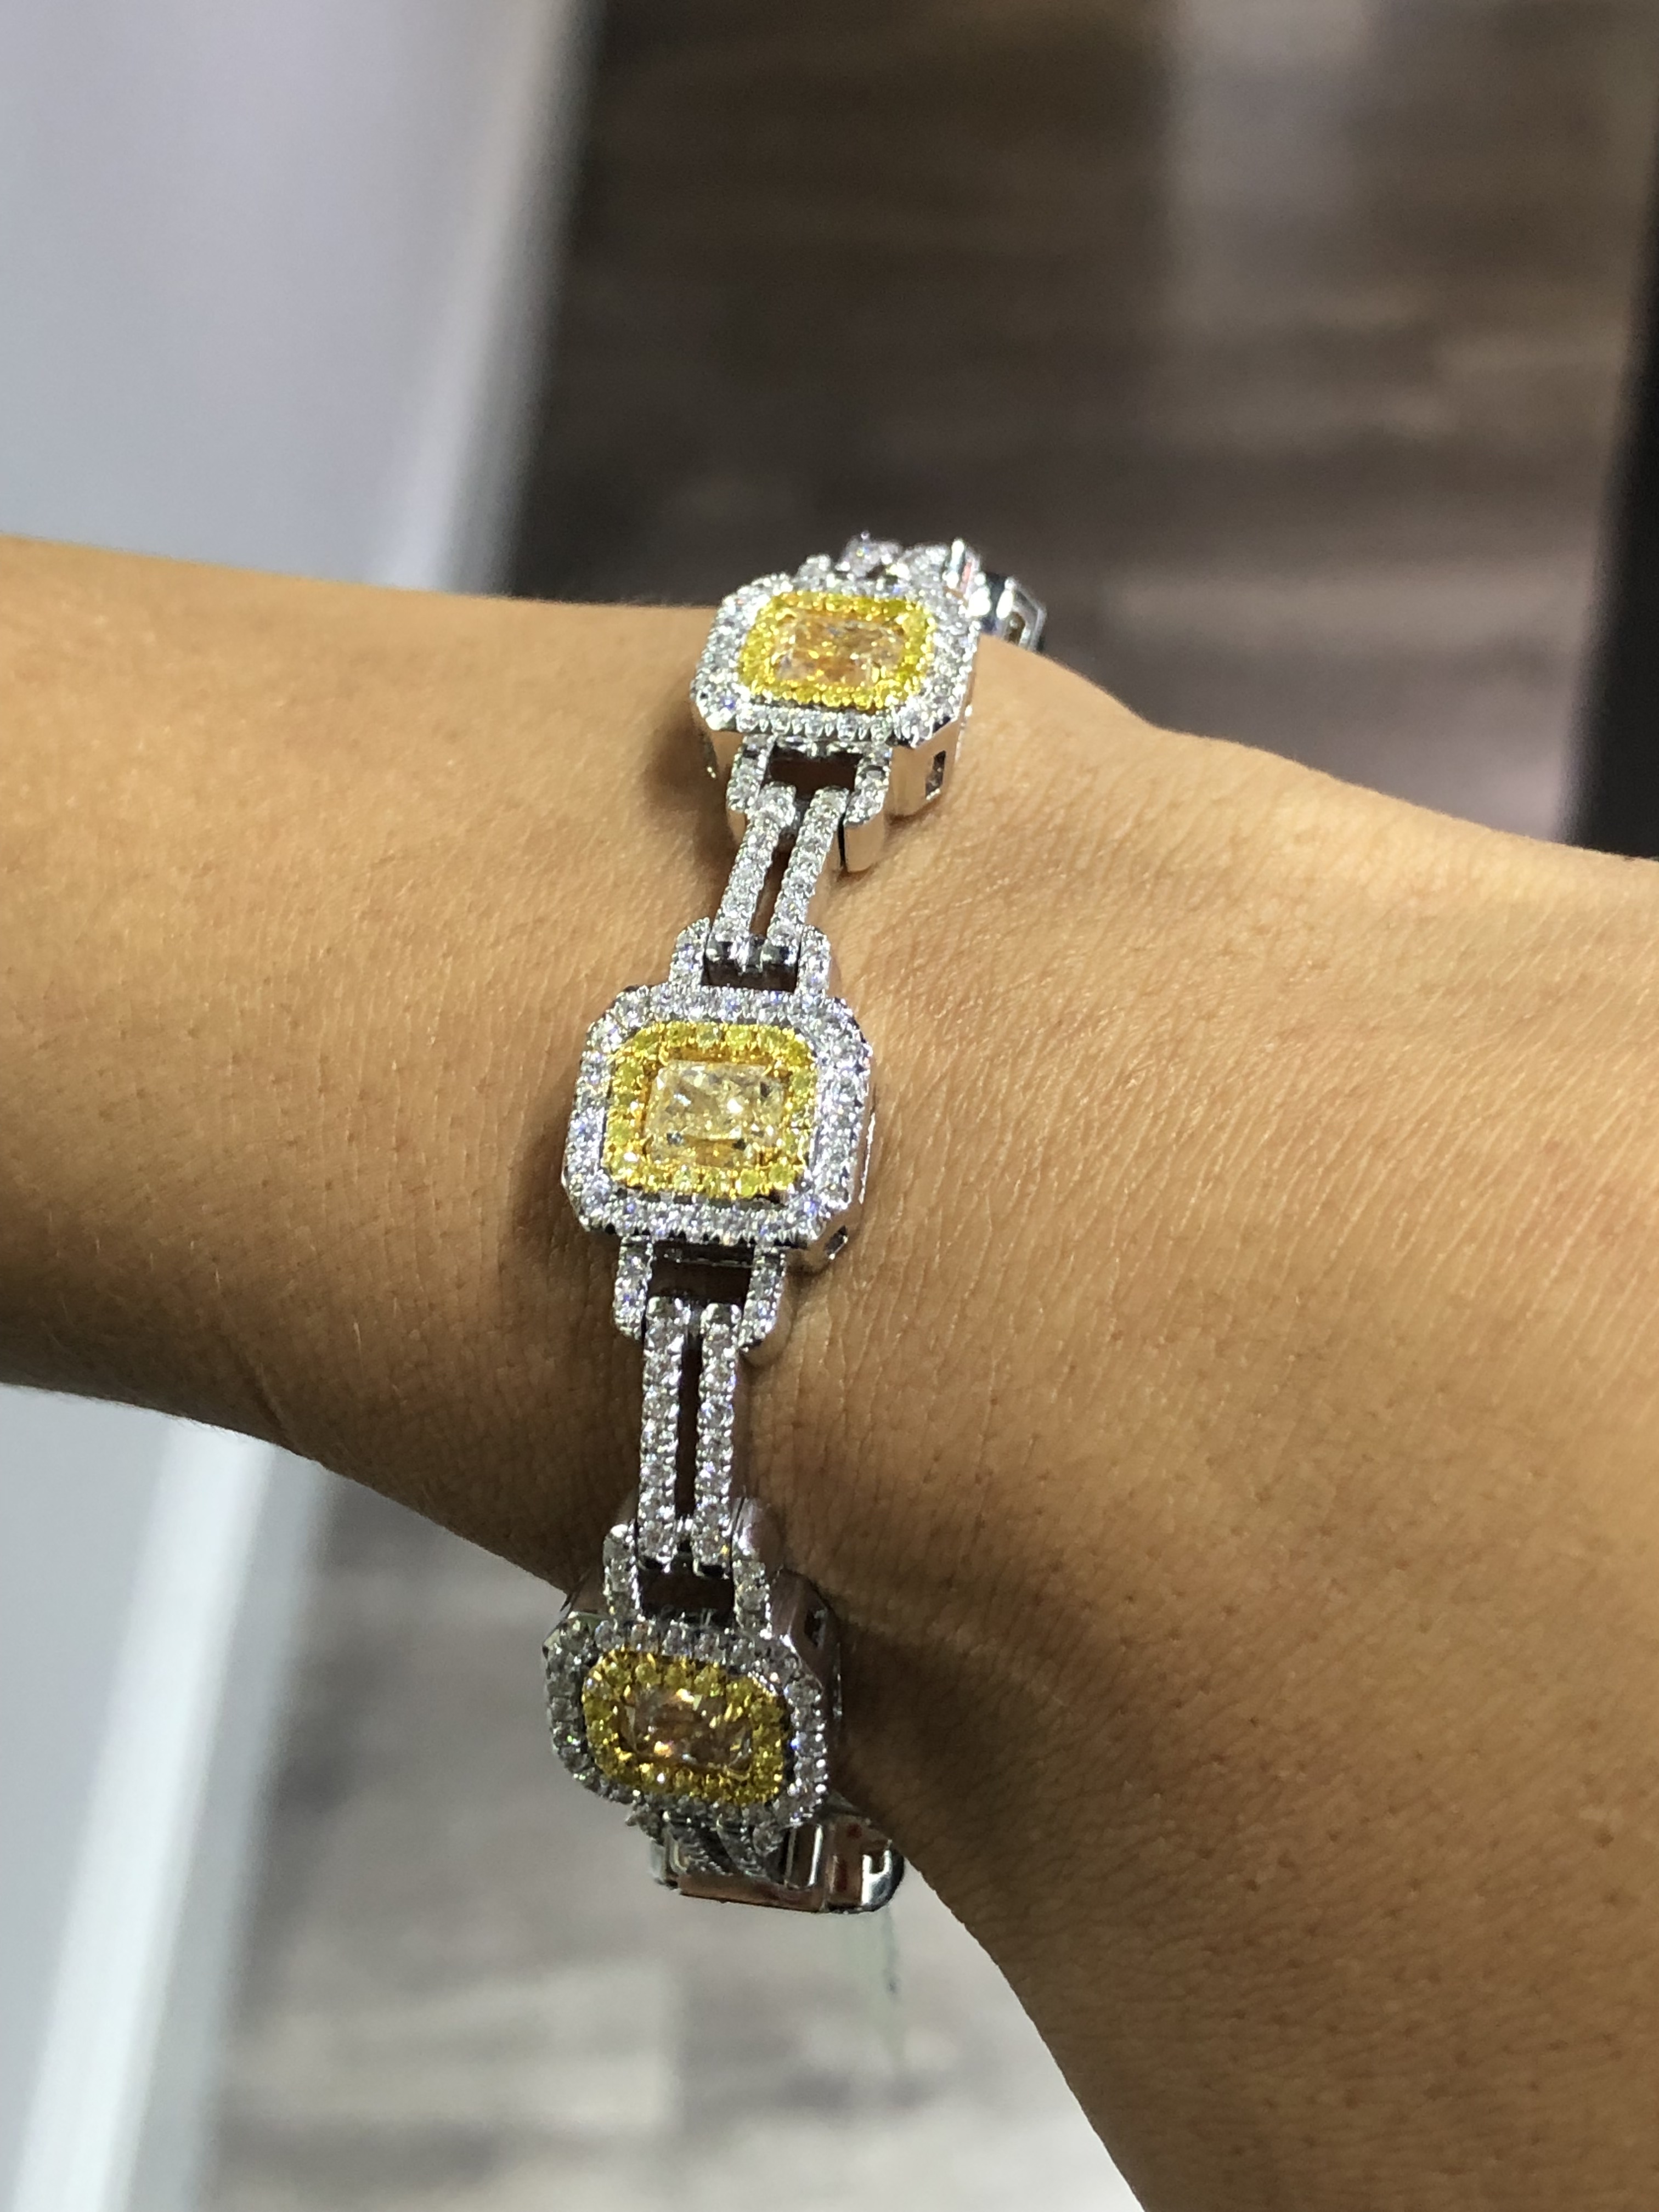 Lady gaga yellow diamond bracelet oscars